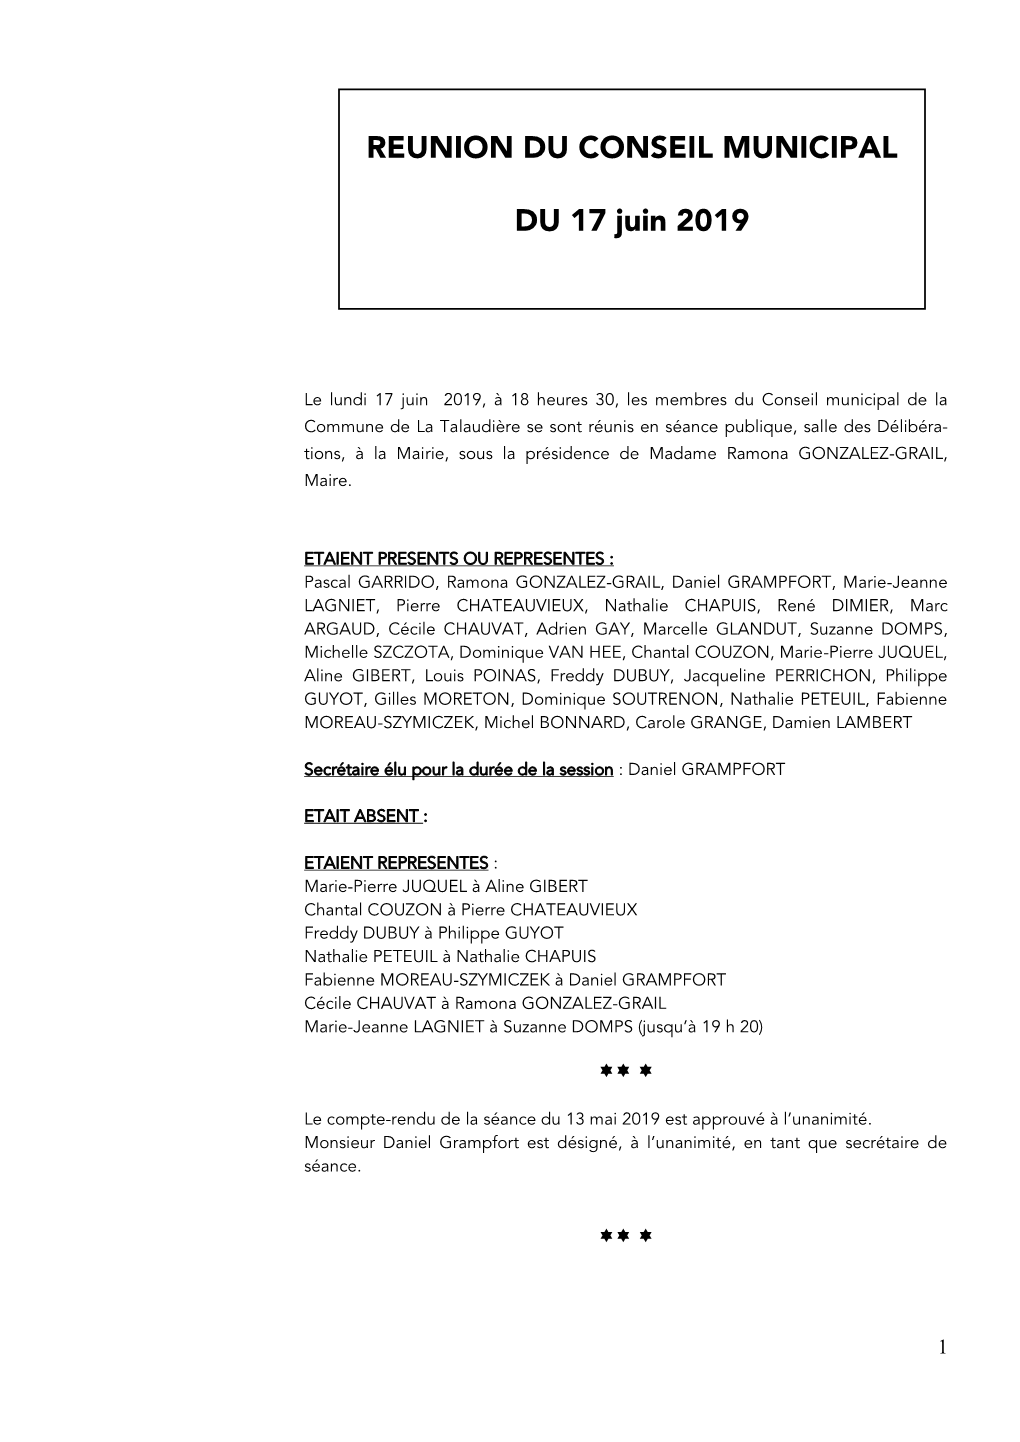 REUNION DU CONSEIL MUNICIPAL DU 17 Juin 2019